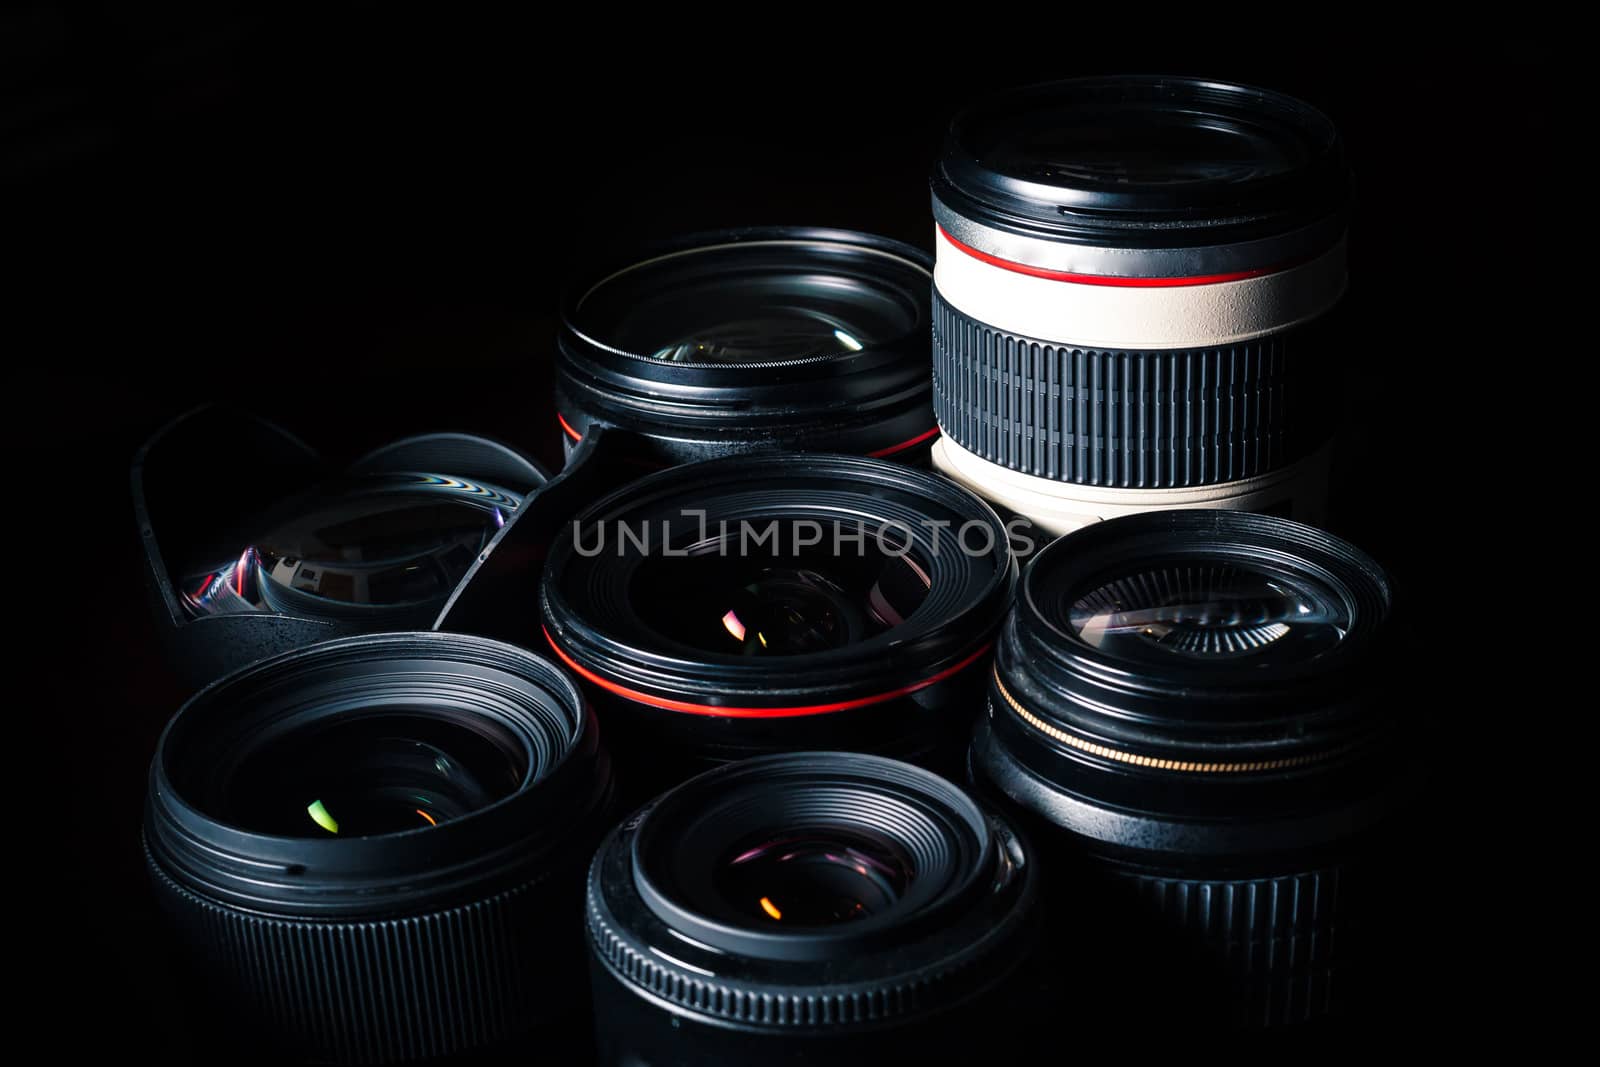 Set of different DSLR lenses on a dark background - dramatic lighting